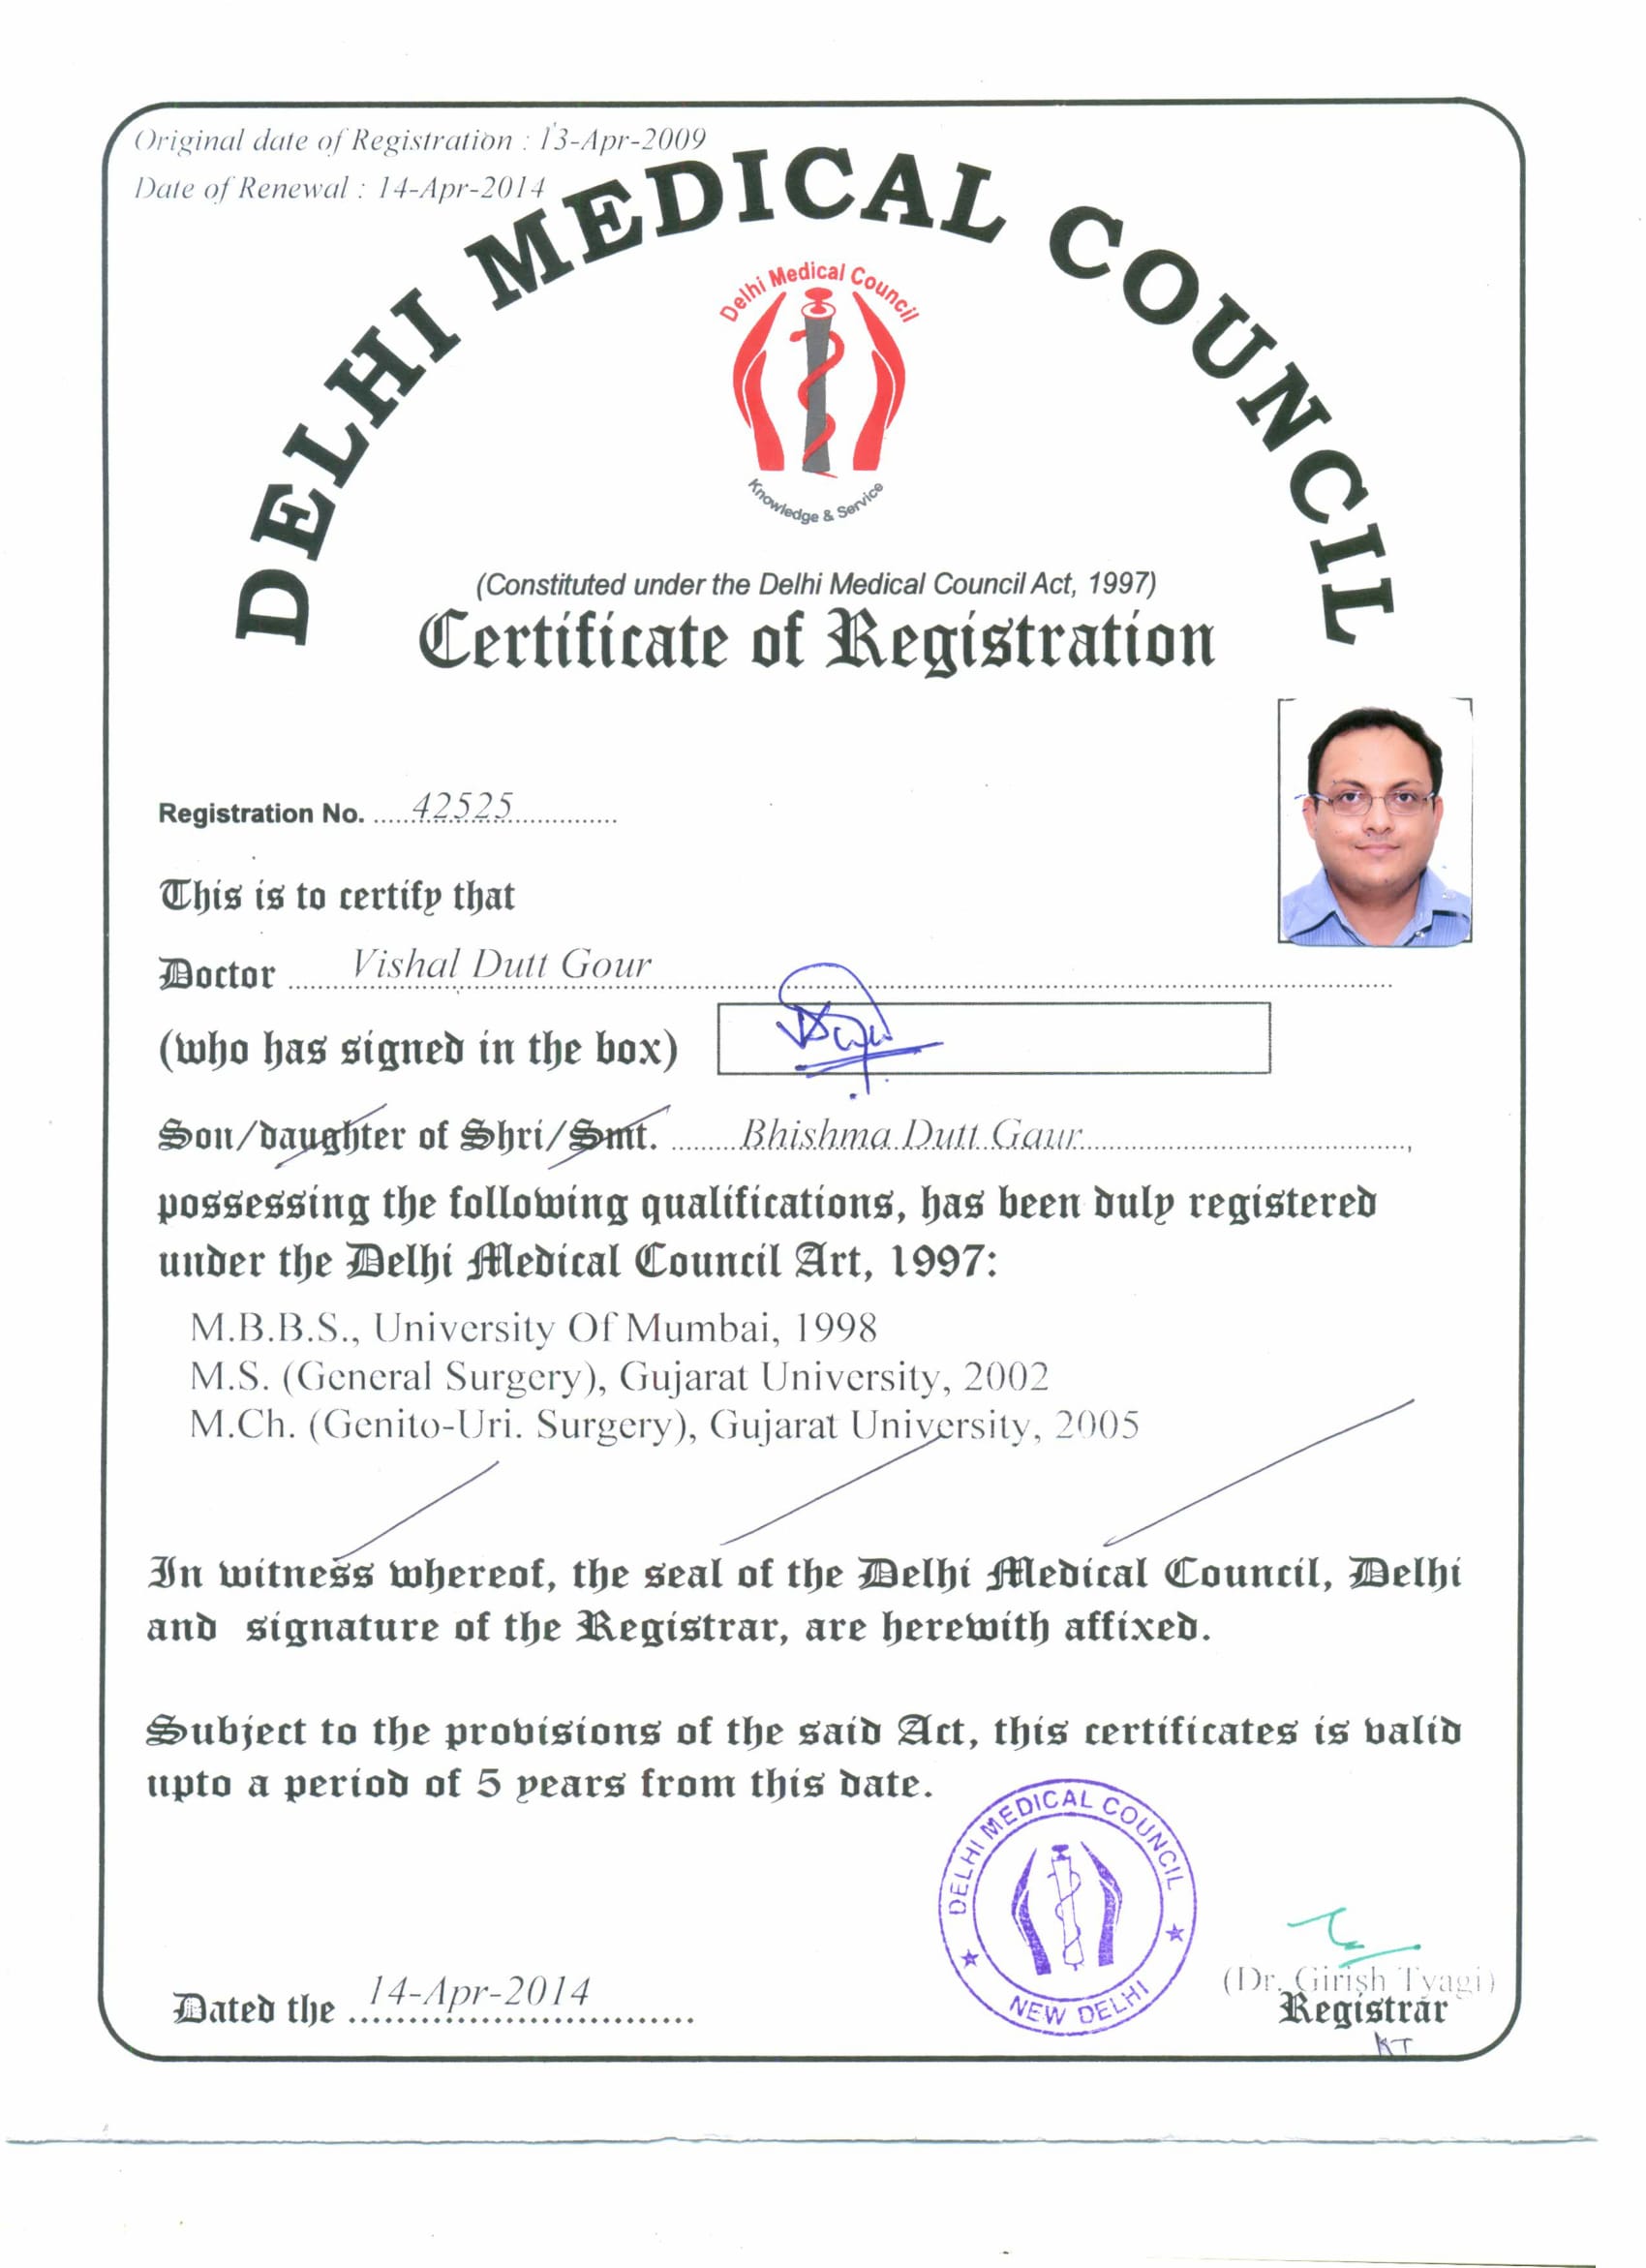 Dr Shivani Sachdev Gour Certificatation of Delhi Medical Council